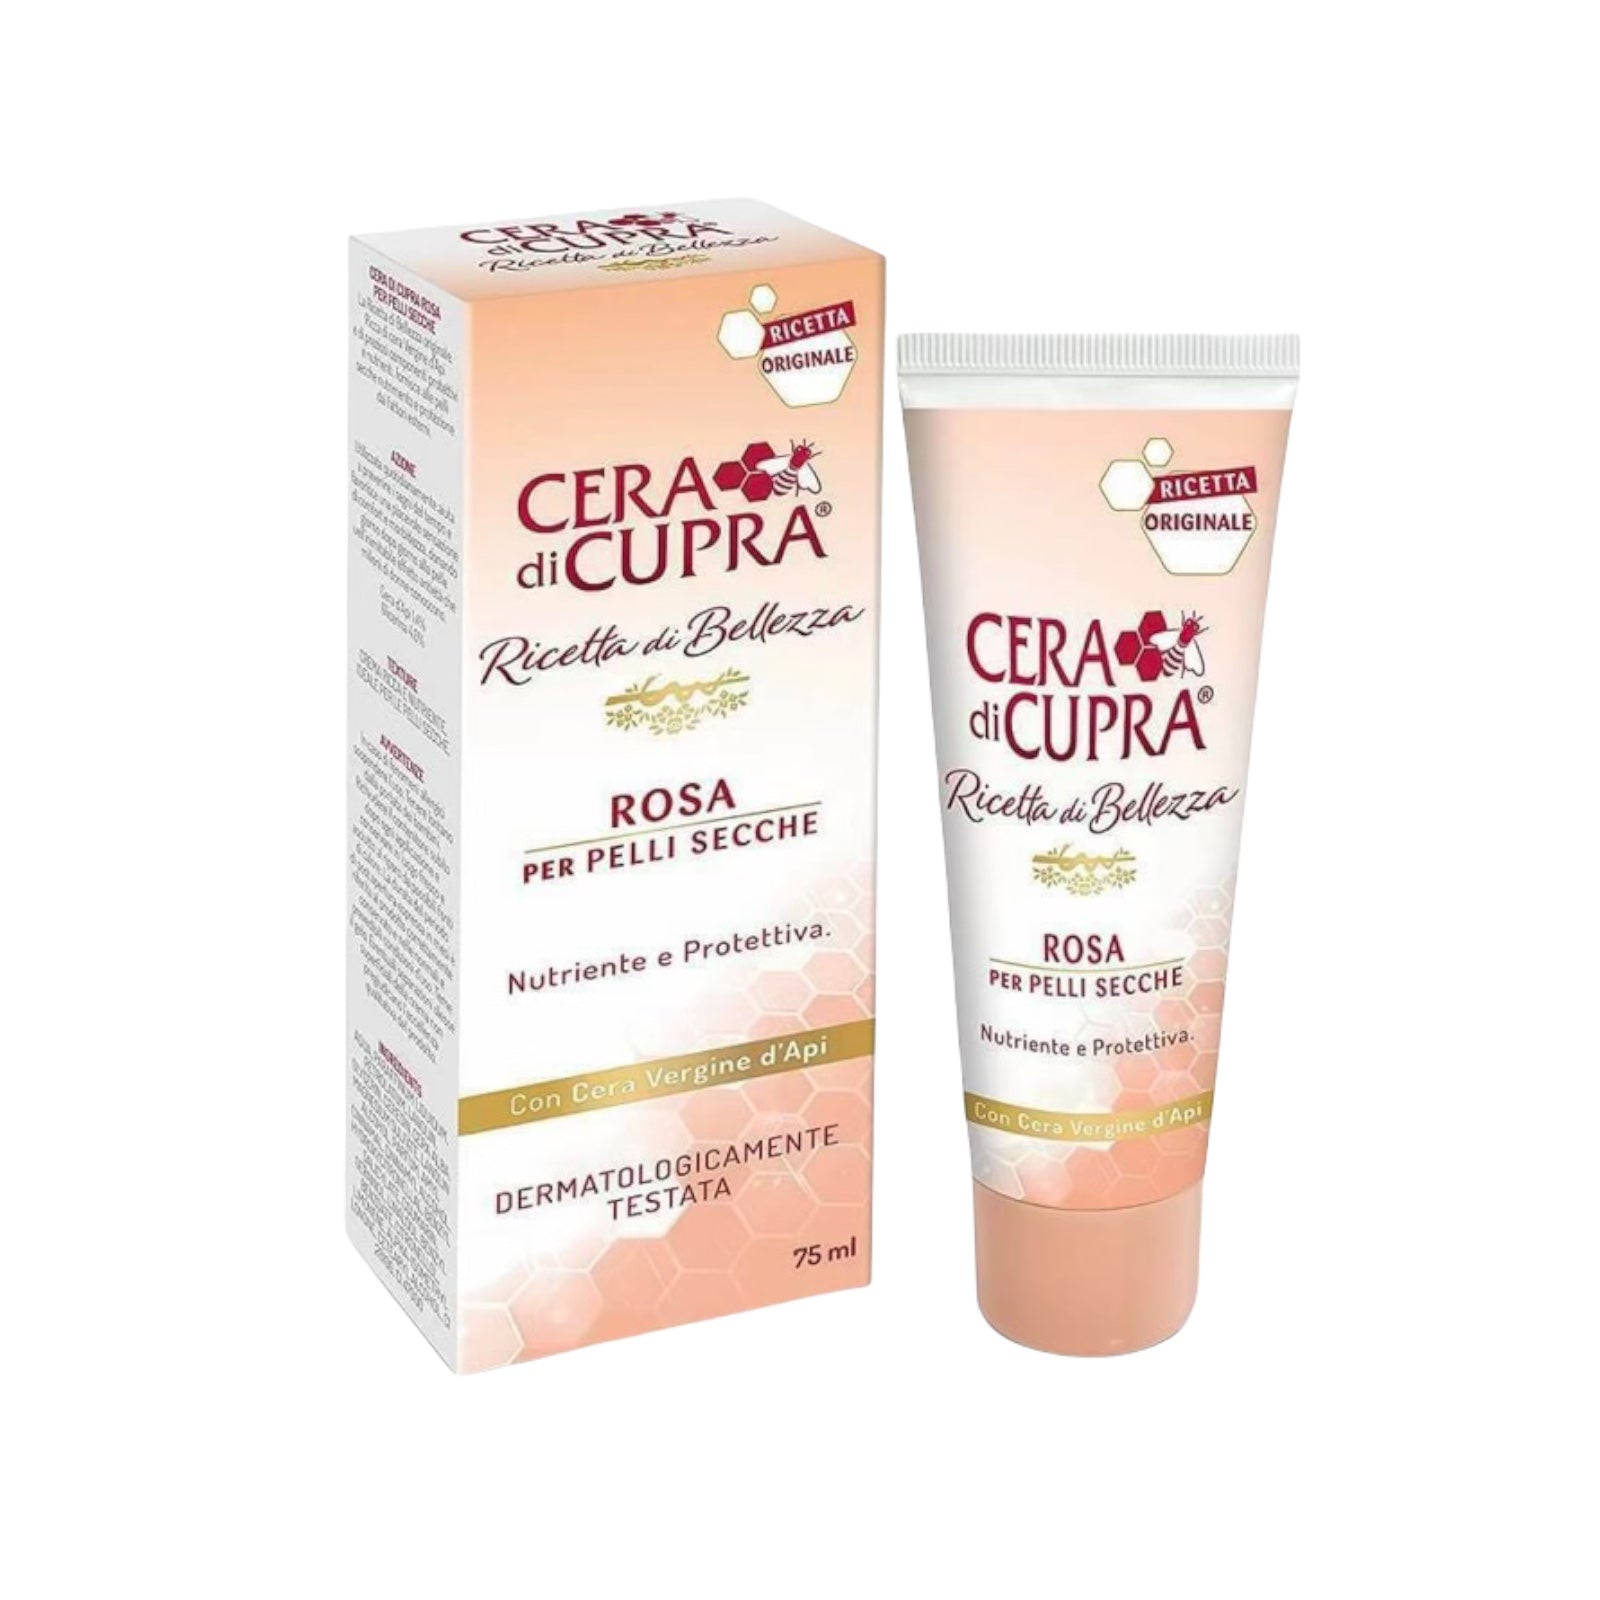 CERA DI CUPRA ROSA - Natural Anti-aging Face Cream for Dry Skin 75ml